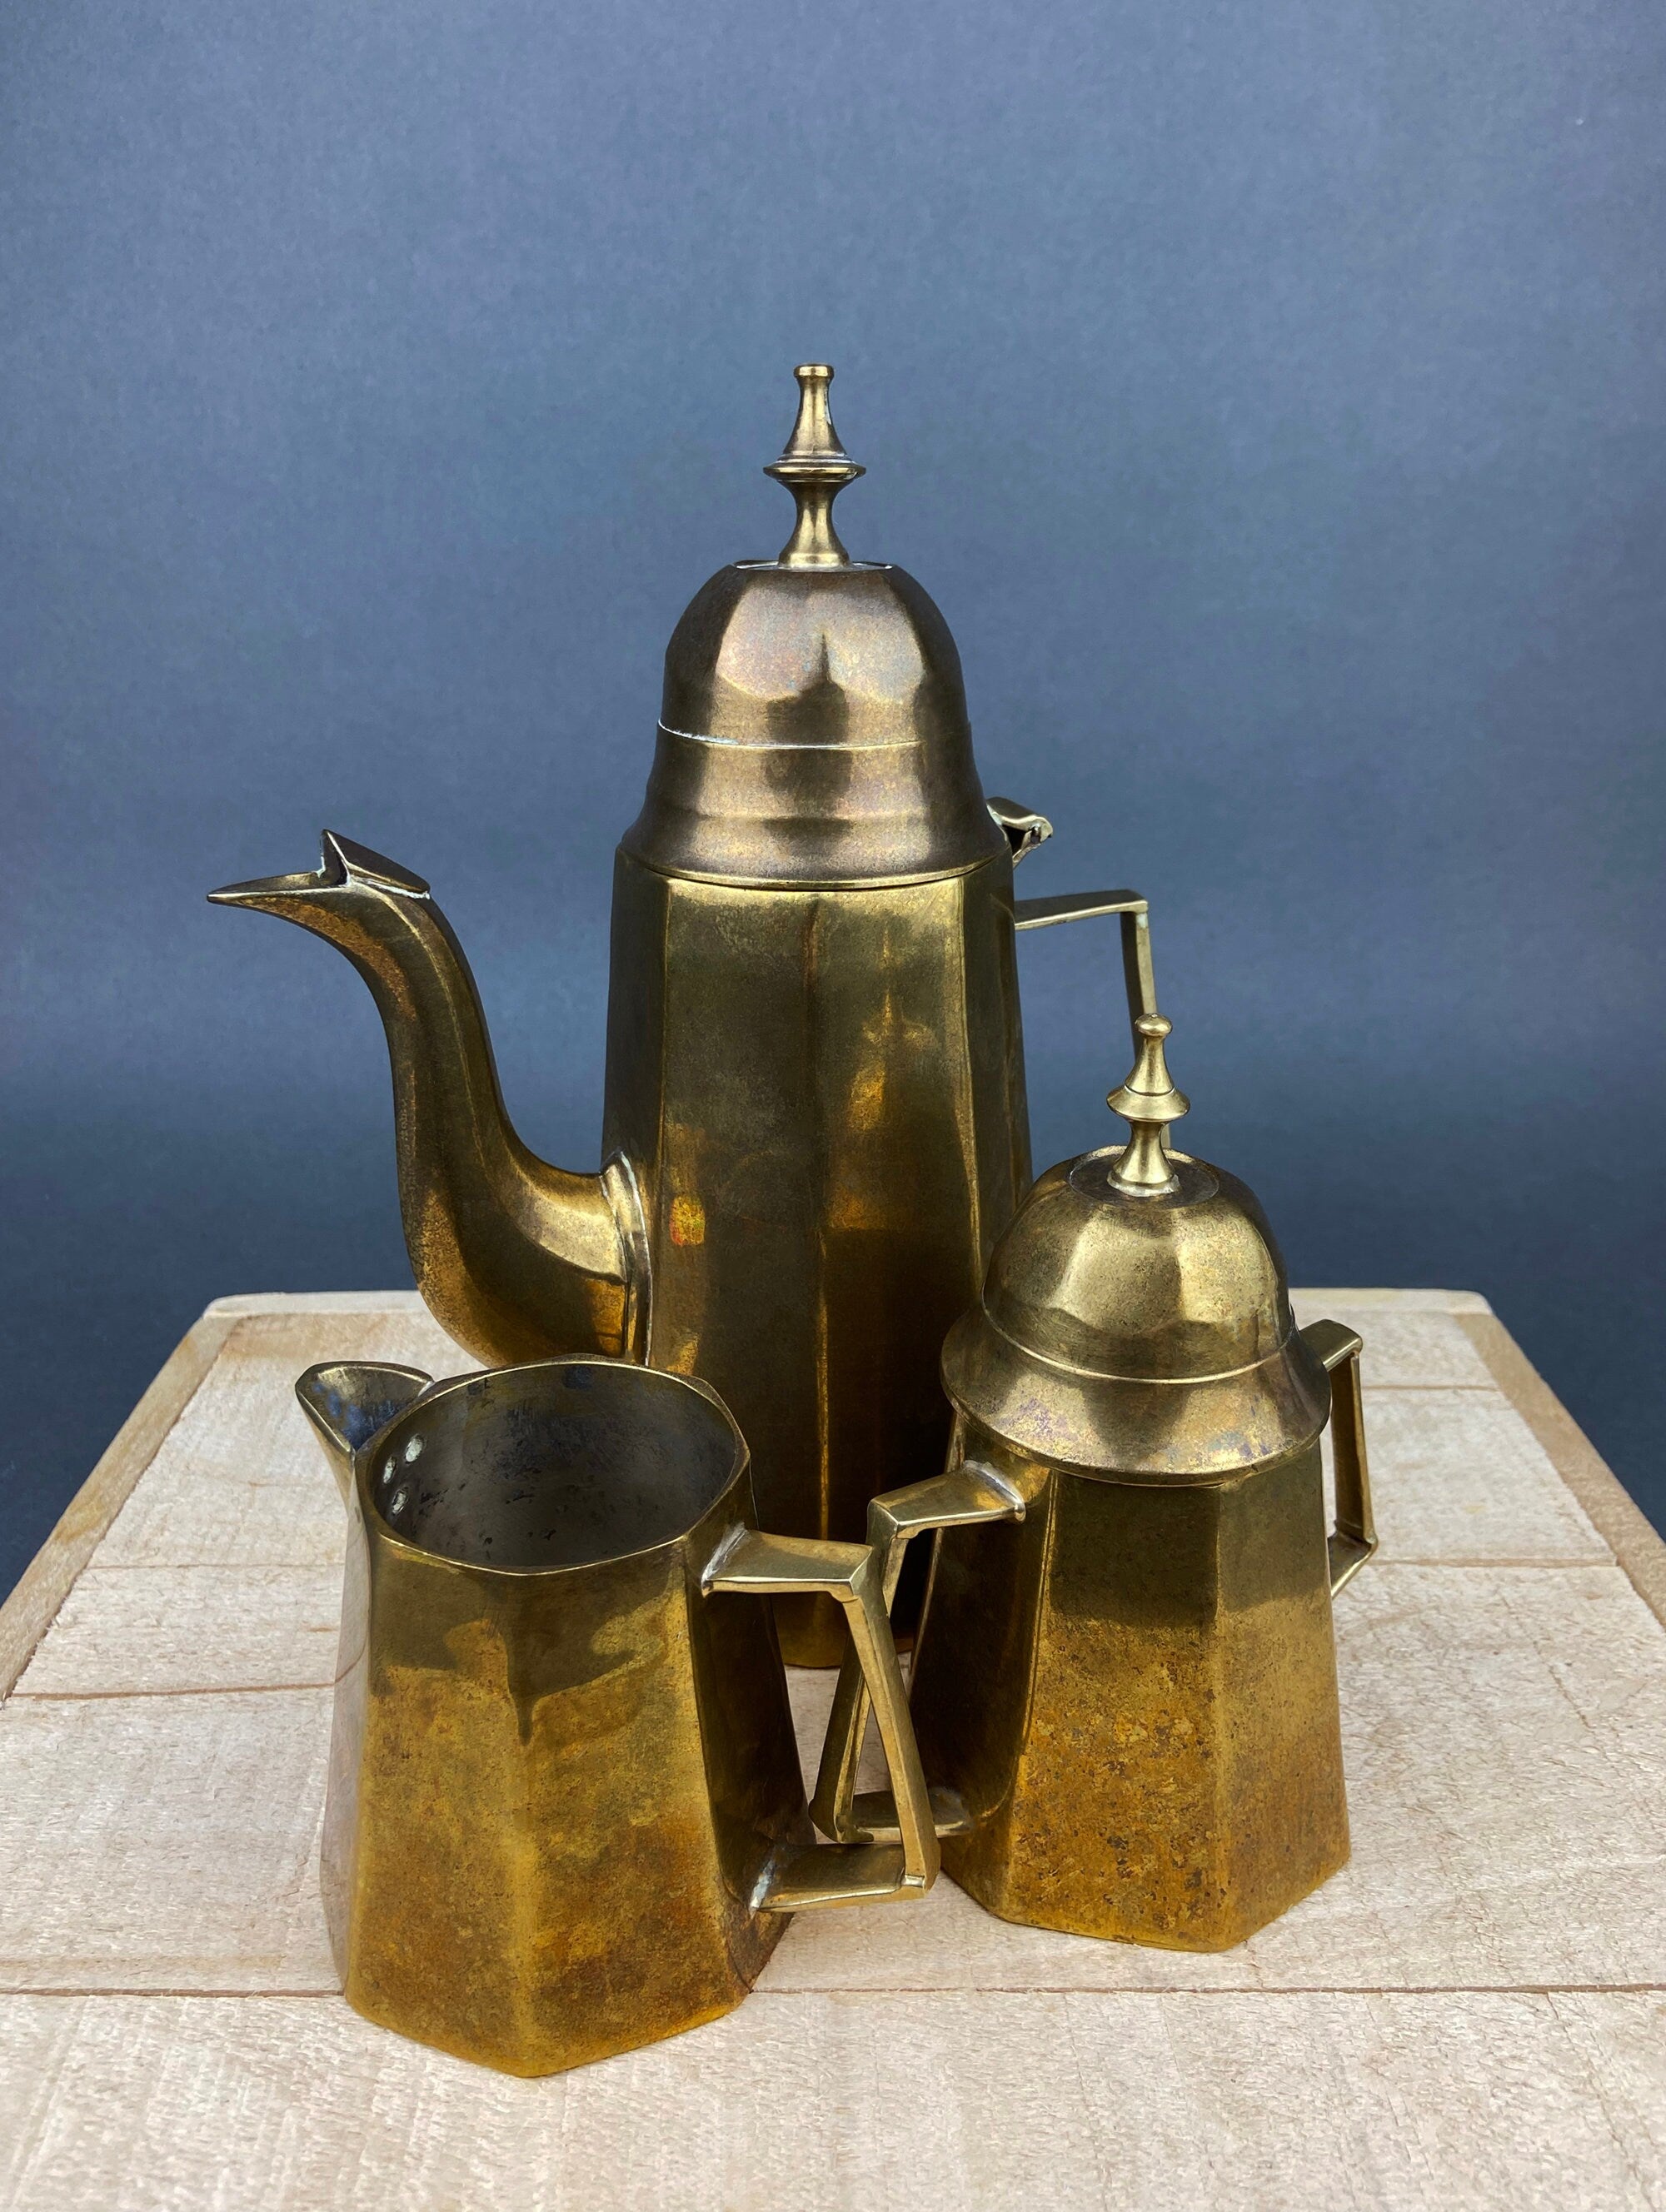 Antique Industrial Coffee Pot